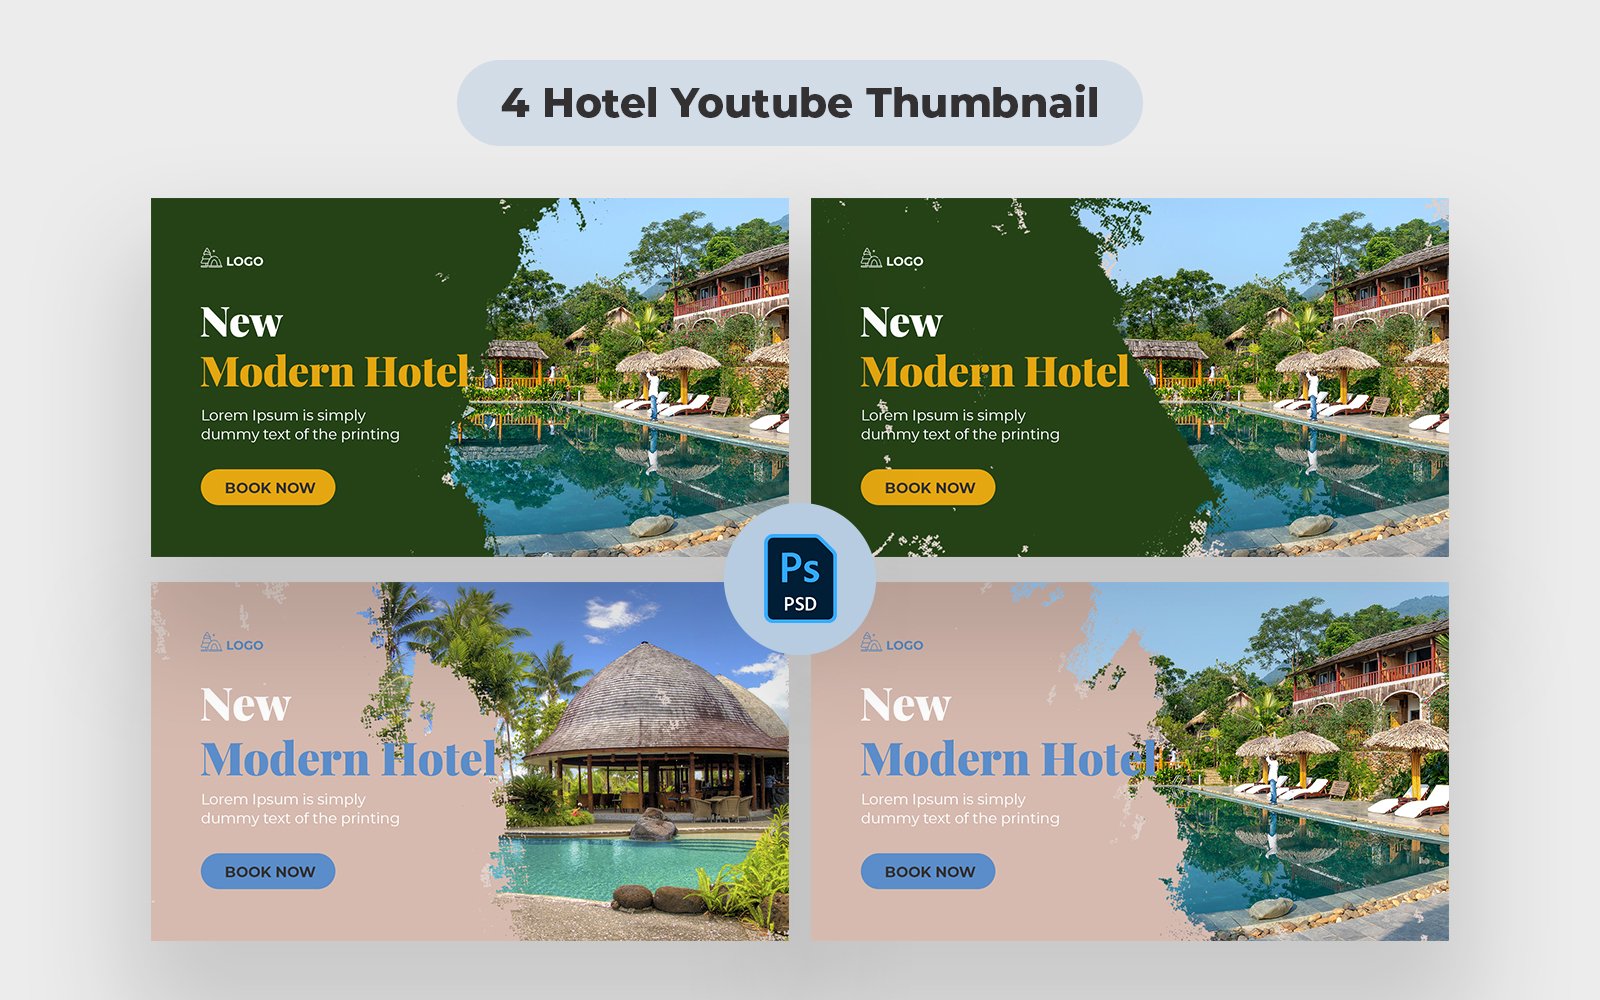 Hotel YouTube Thumbnail Design